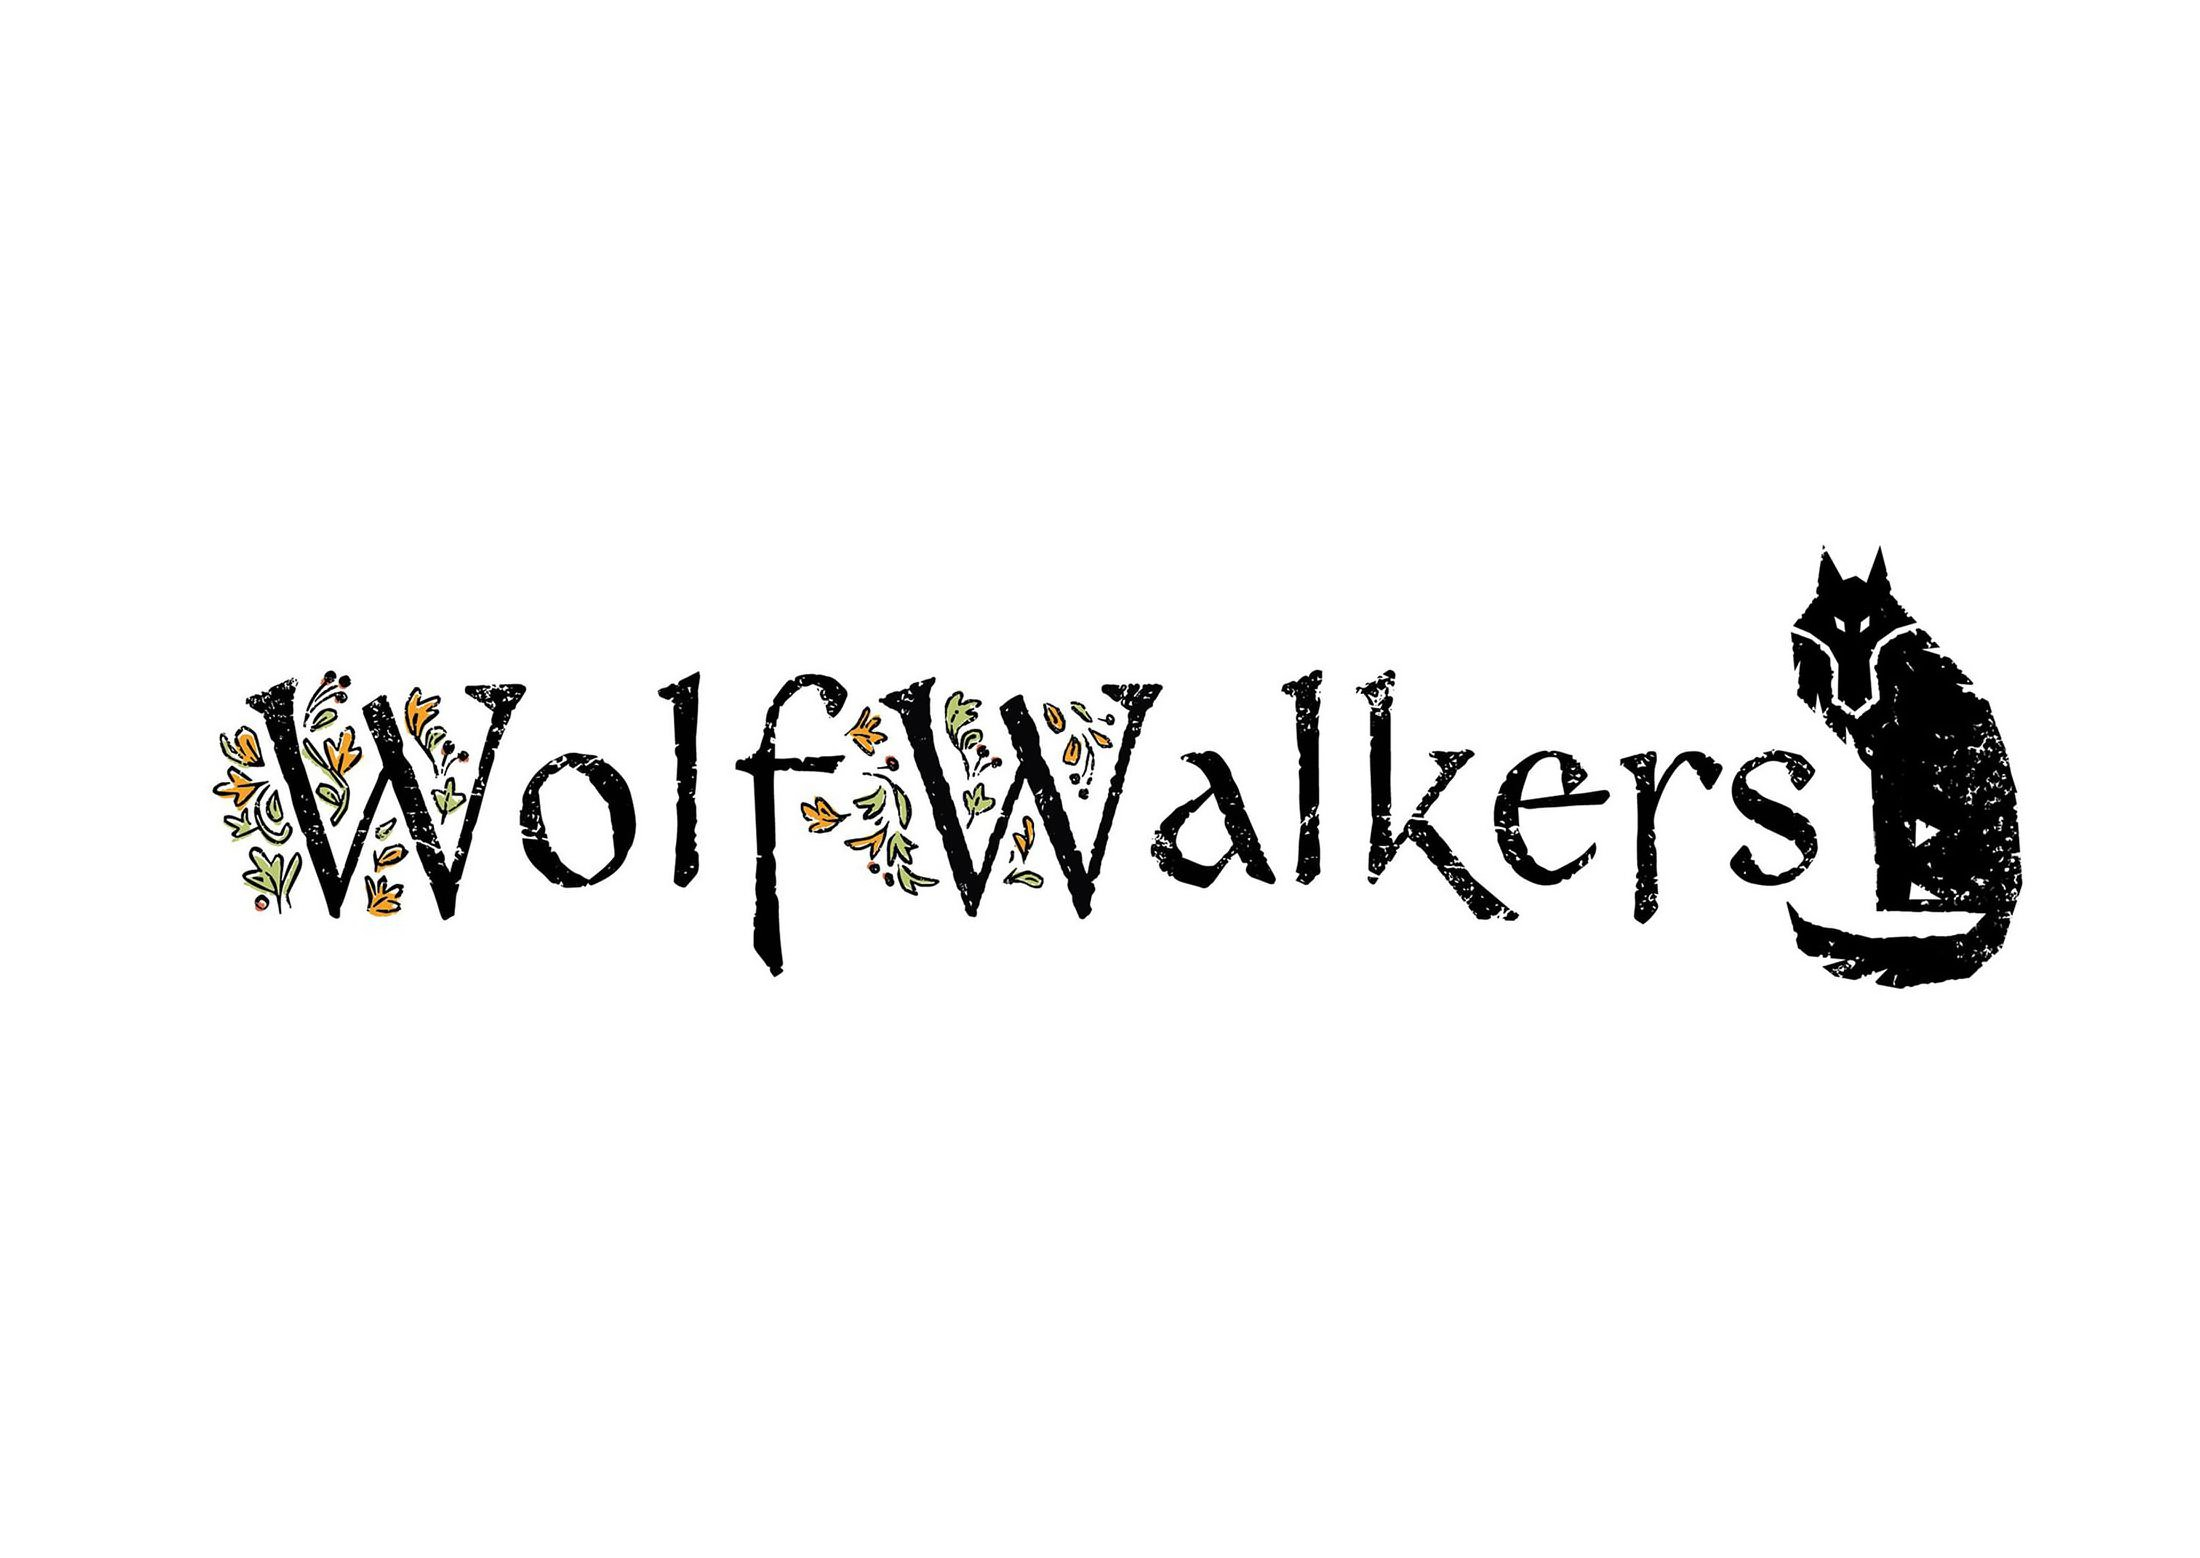 WOLFWALKERS - The Cartoon Saloon Trademark Registration